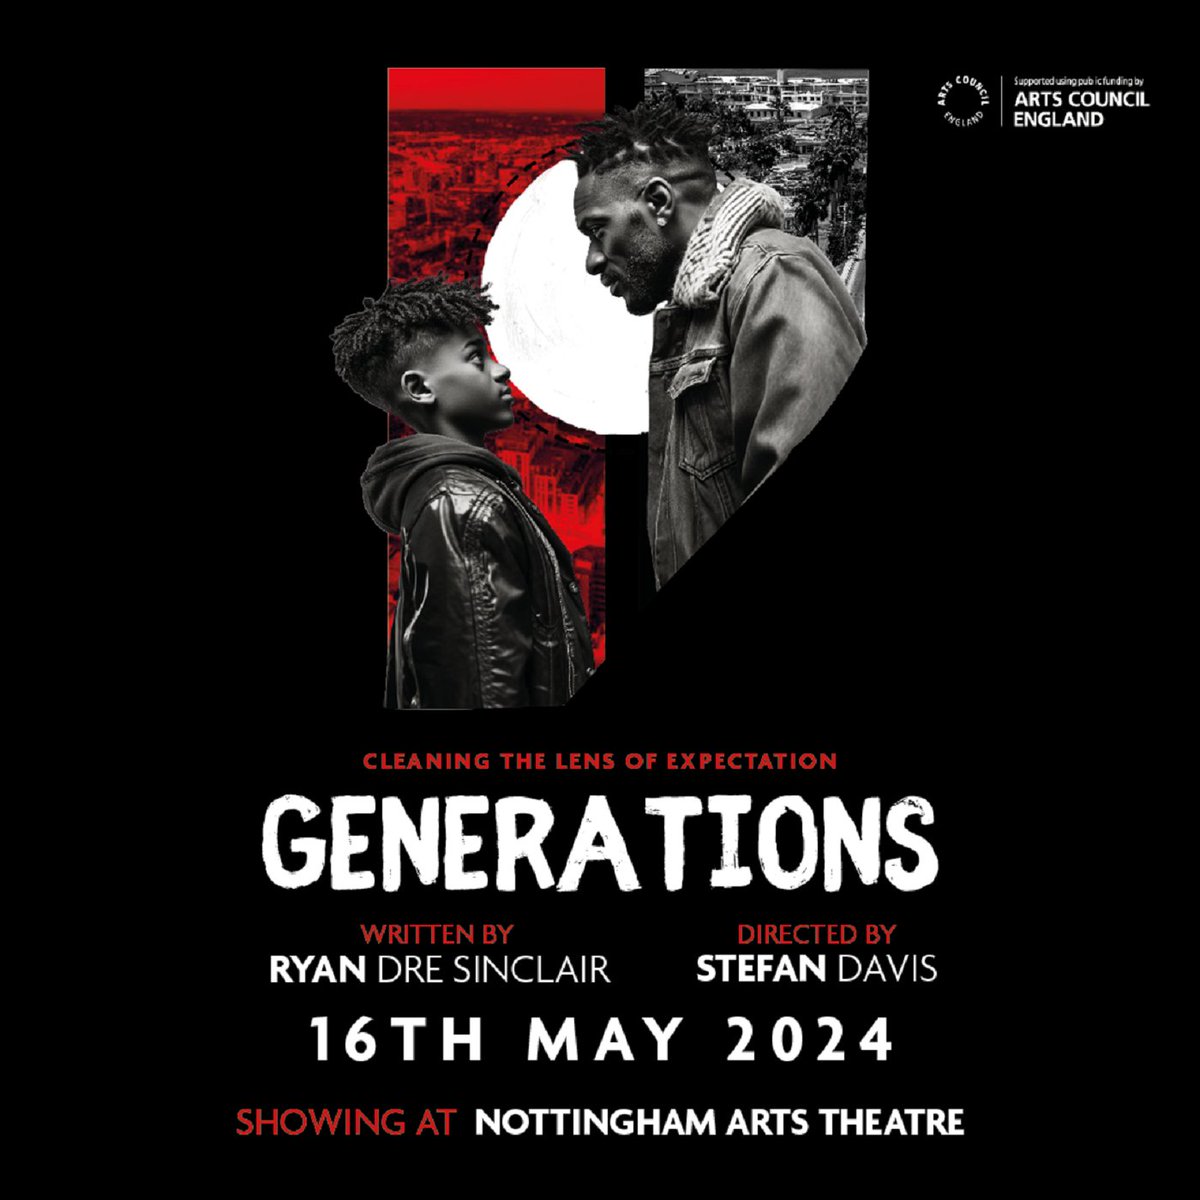 Generations Ryan Dre Sinclair 16th May Nottingham Arts Theatre mynottz.com/theatreomn.htm… #theatreomn #ohmynottz